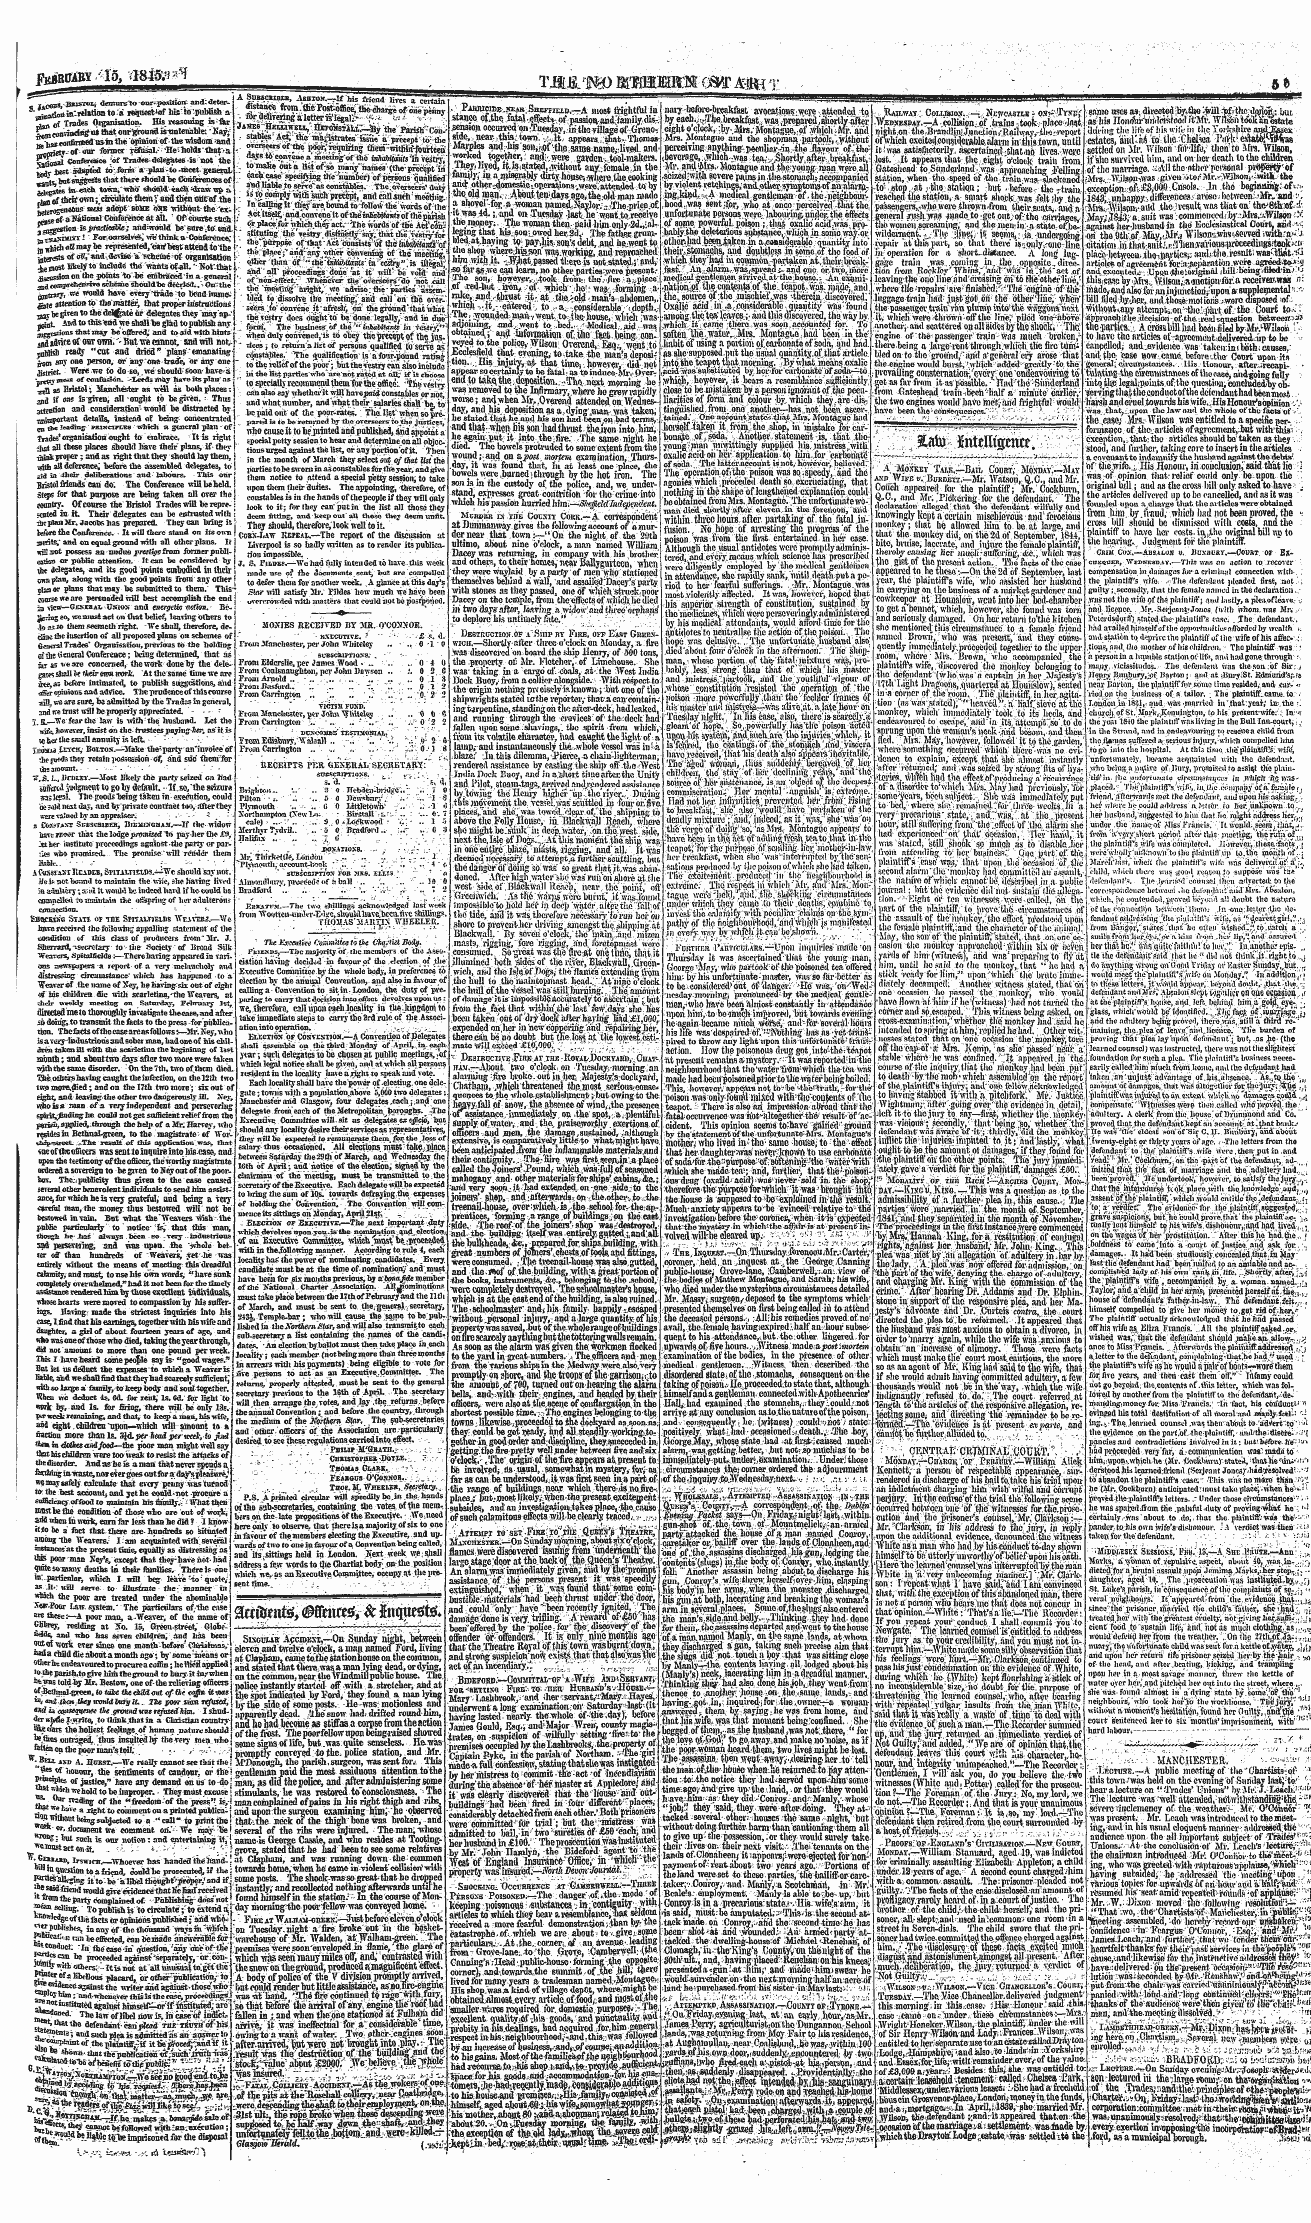 Northern Star (1837-1852): jS F Y, 4th edition - Sixgtiur Apcroexi,—Oa Sunday Night, Jbet...